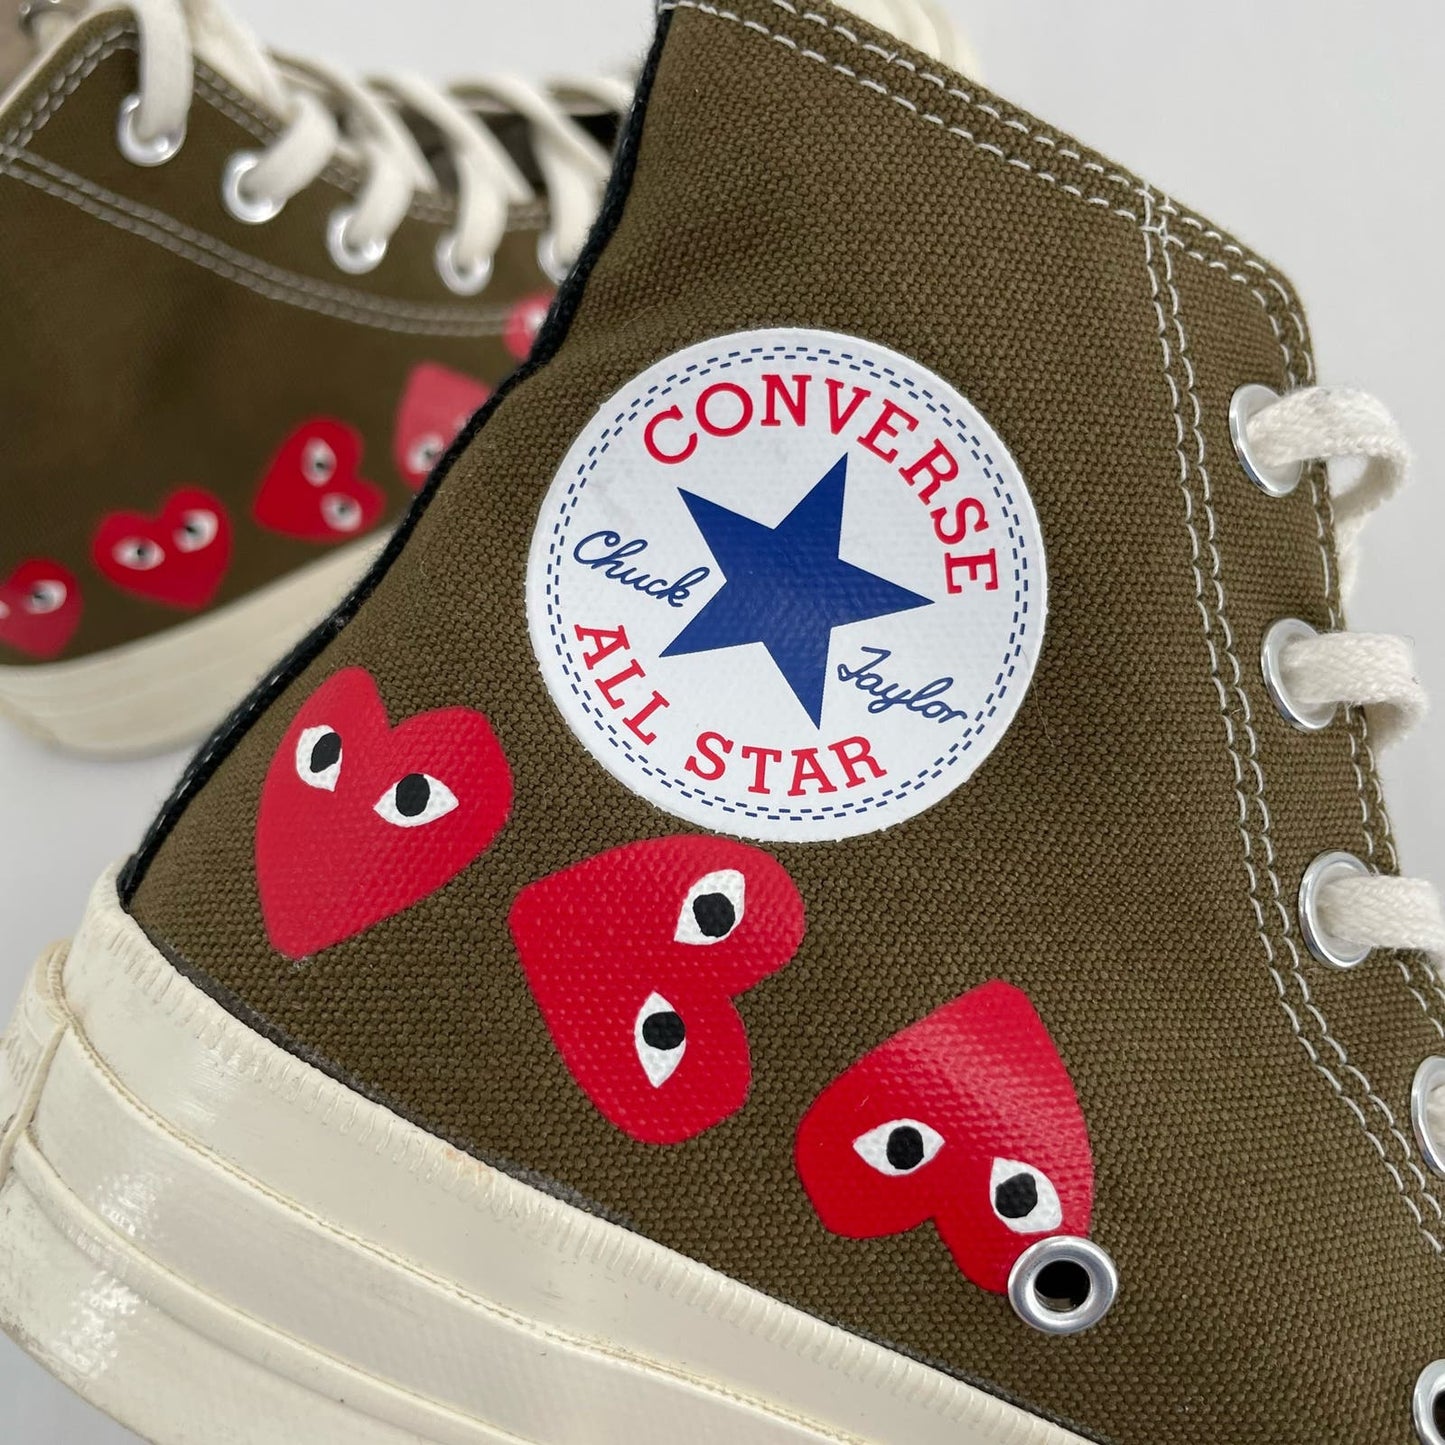 Converse X Comme des Garcons Play Chuck Taylor Multi Heart Khaki Sneaker Shoes Size 7